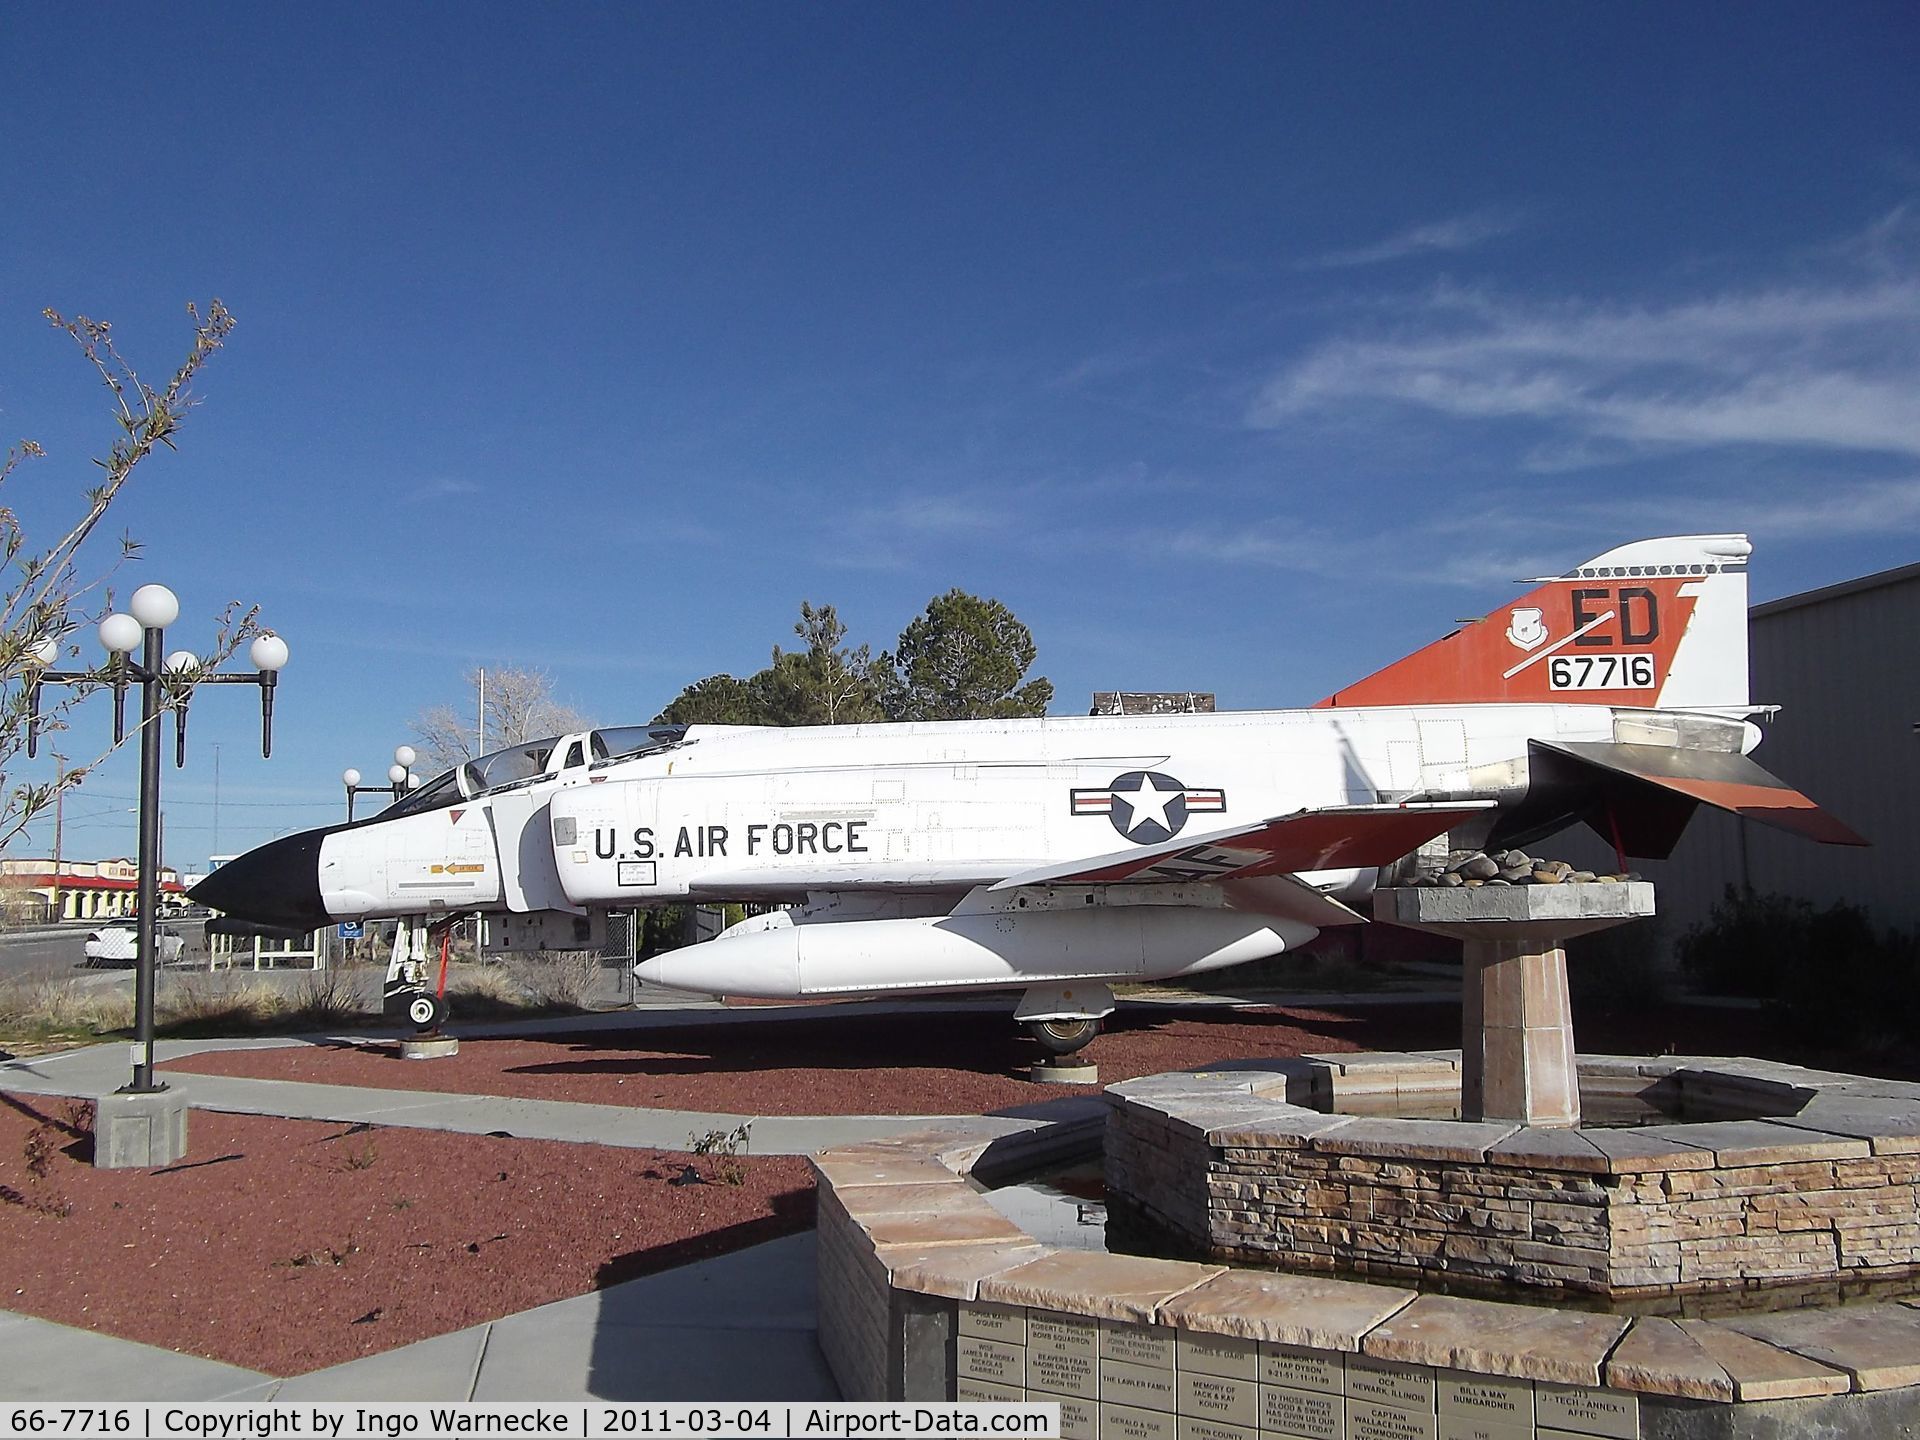 66-7716, 1966 McDonnell F-4D-31-MC Phantom II C/N 2337, McDonnell F-4D Phantom II at the Col. Vernon P. Saxon Jr. Aerospace Museum, Boron CA